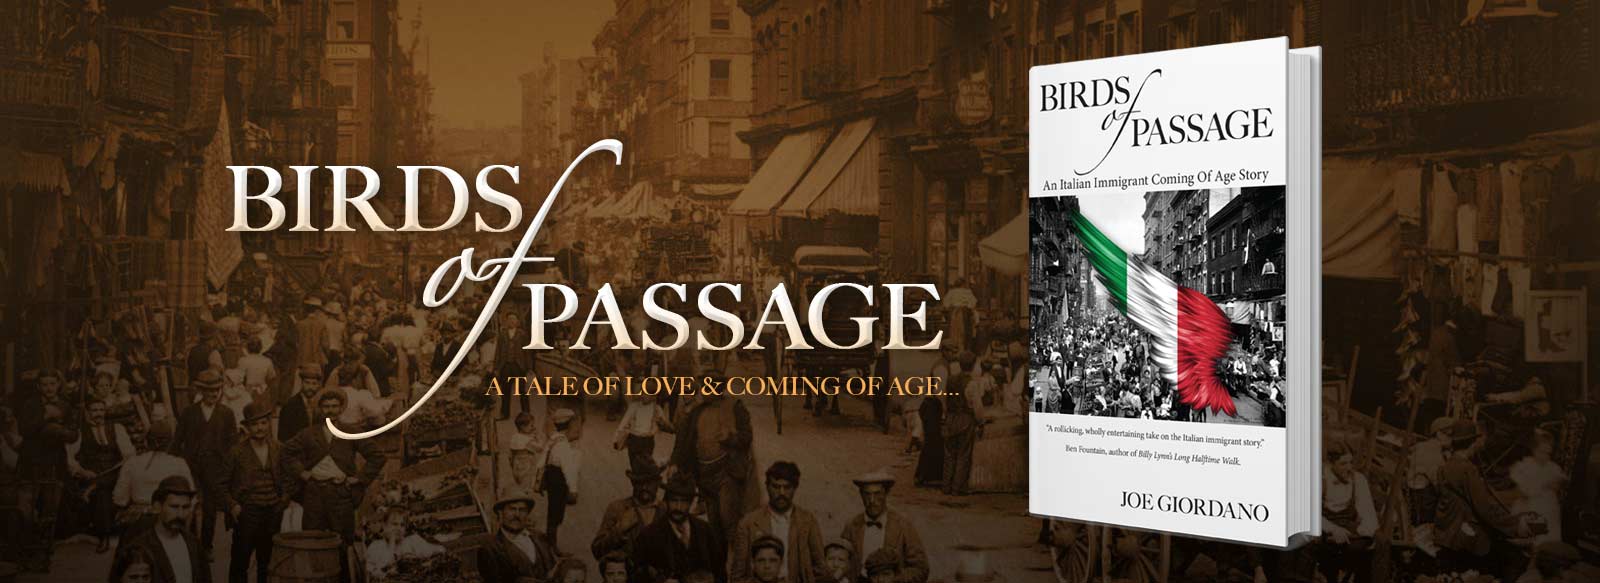 birds of passage book